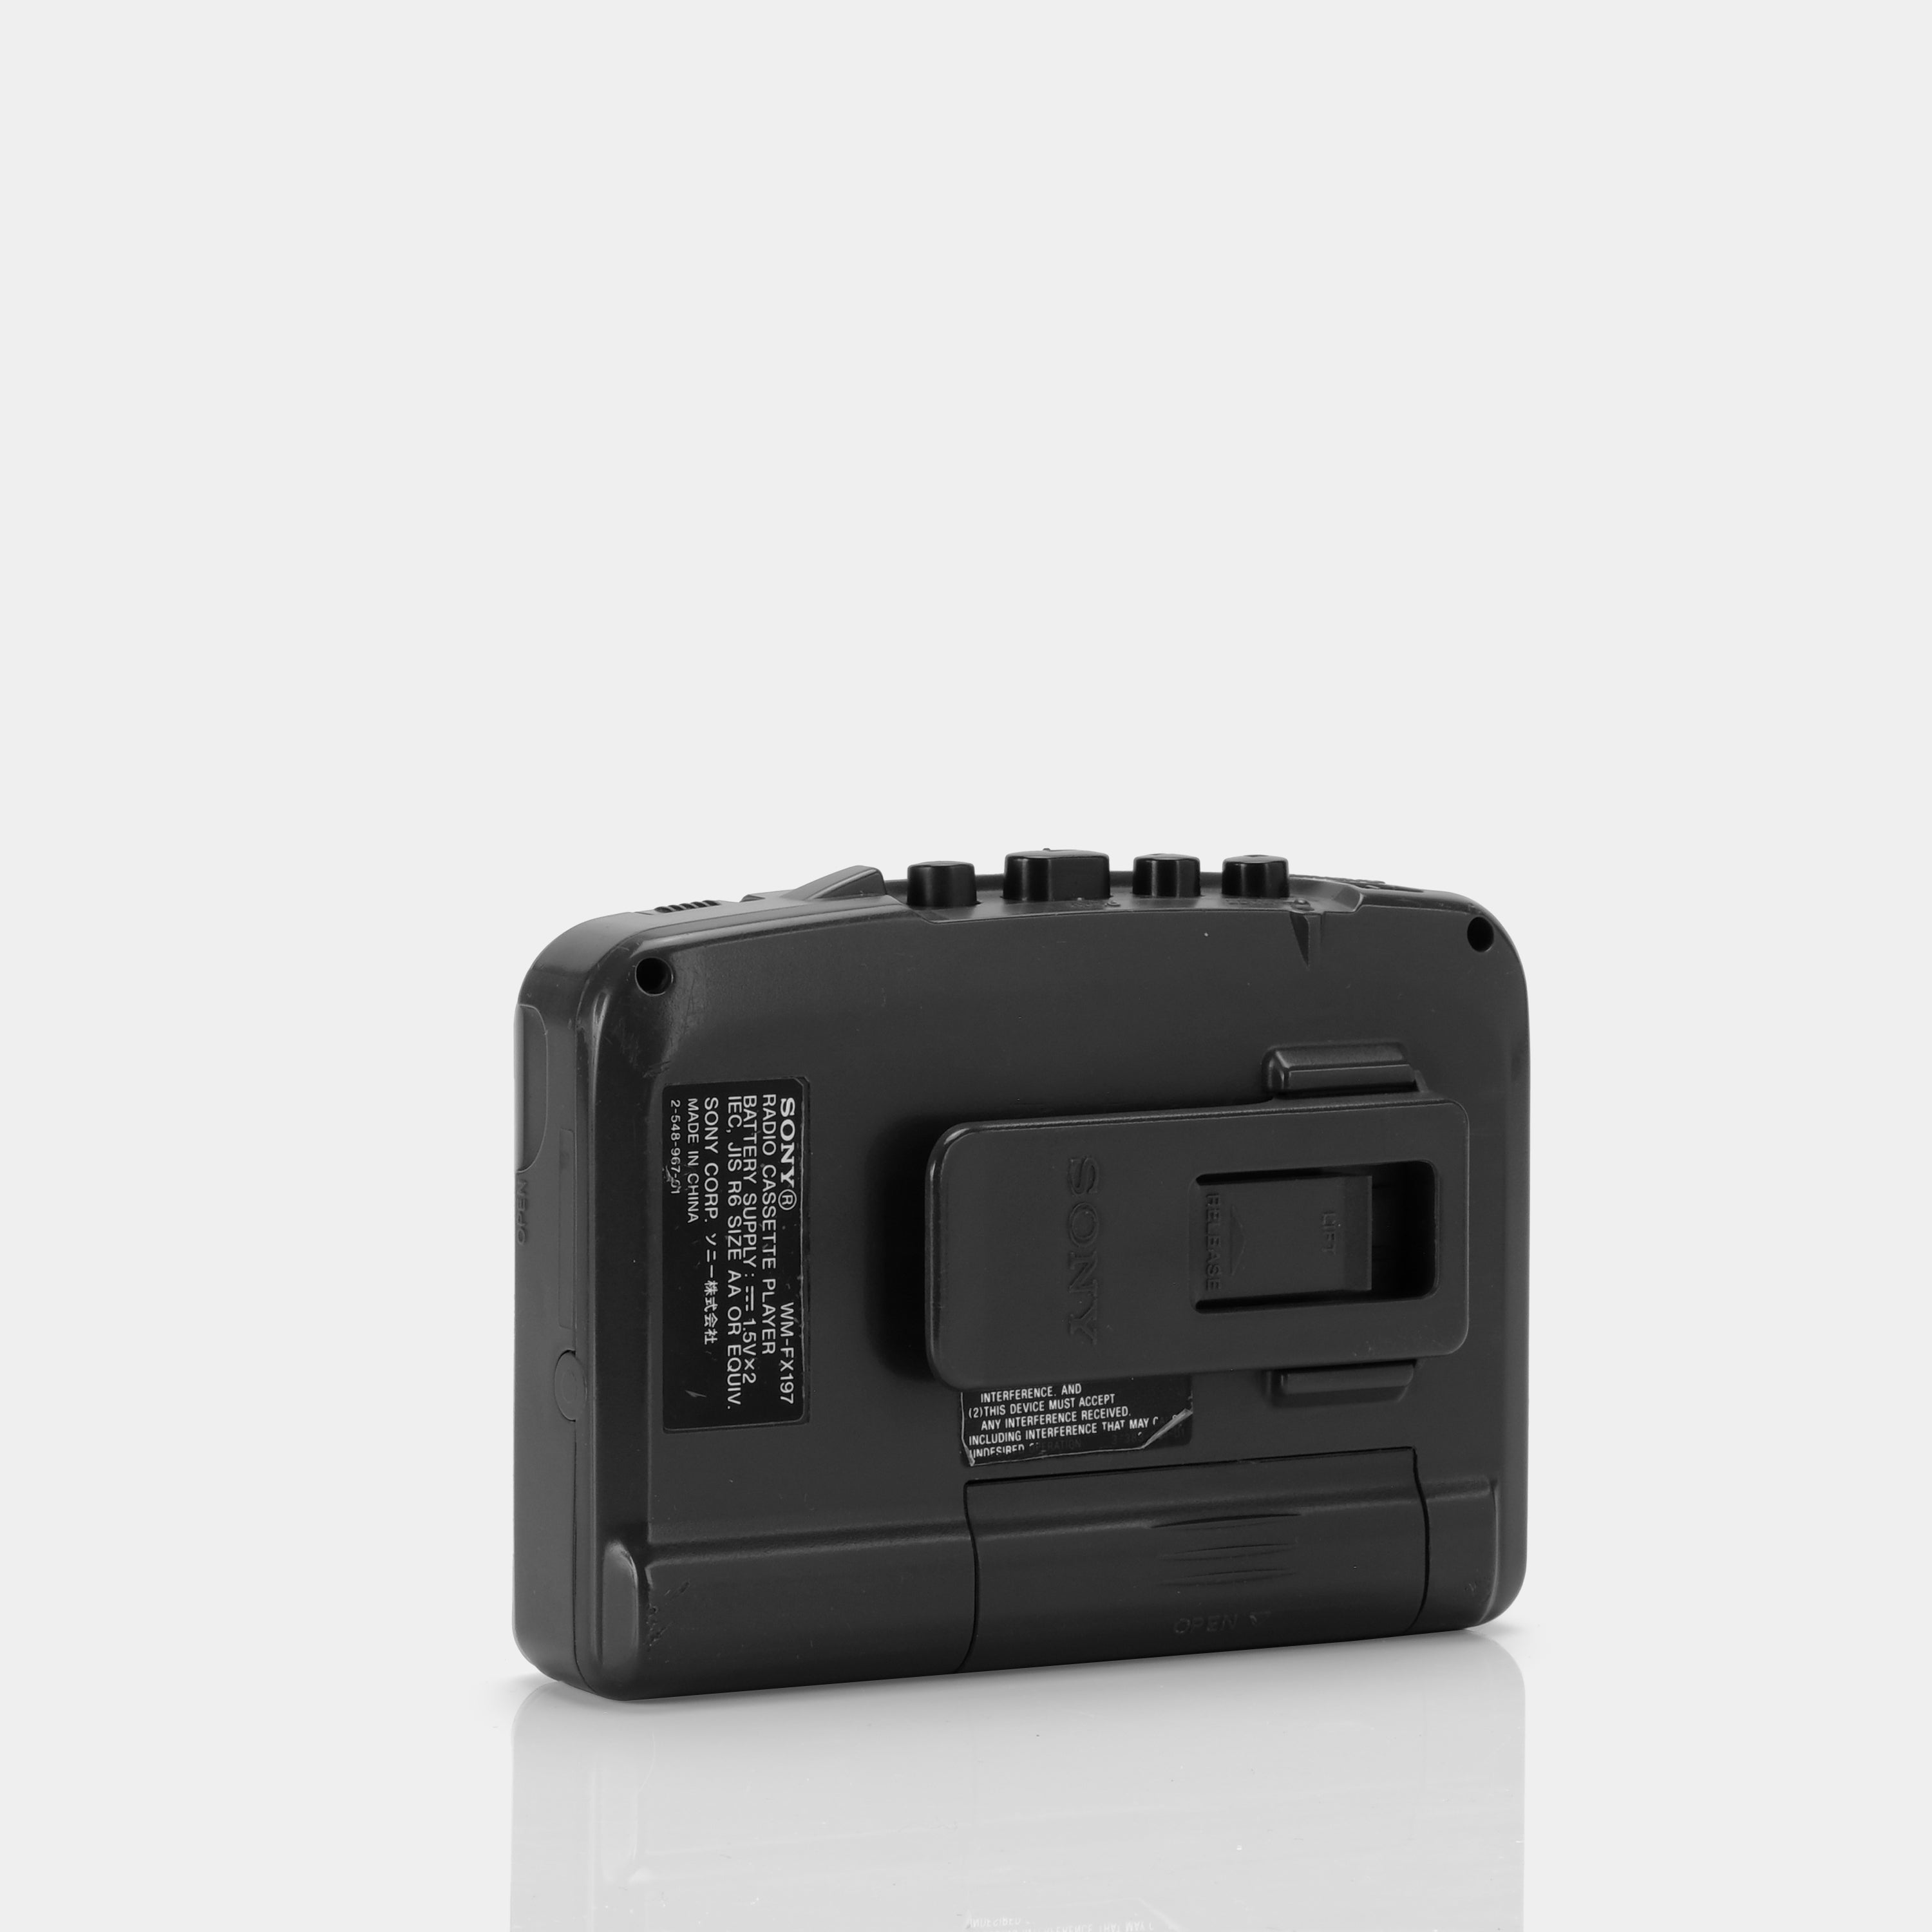 Sony Walkman WM-FX197 FM/AM Mega Bass Portable Cassette Player (B-Grade)